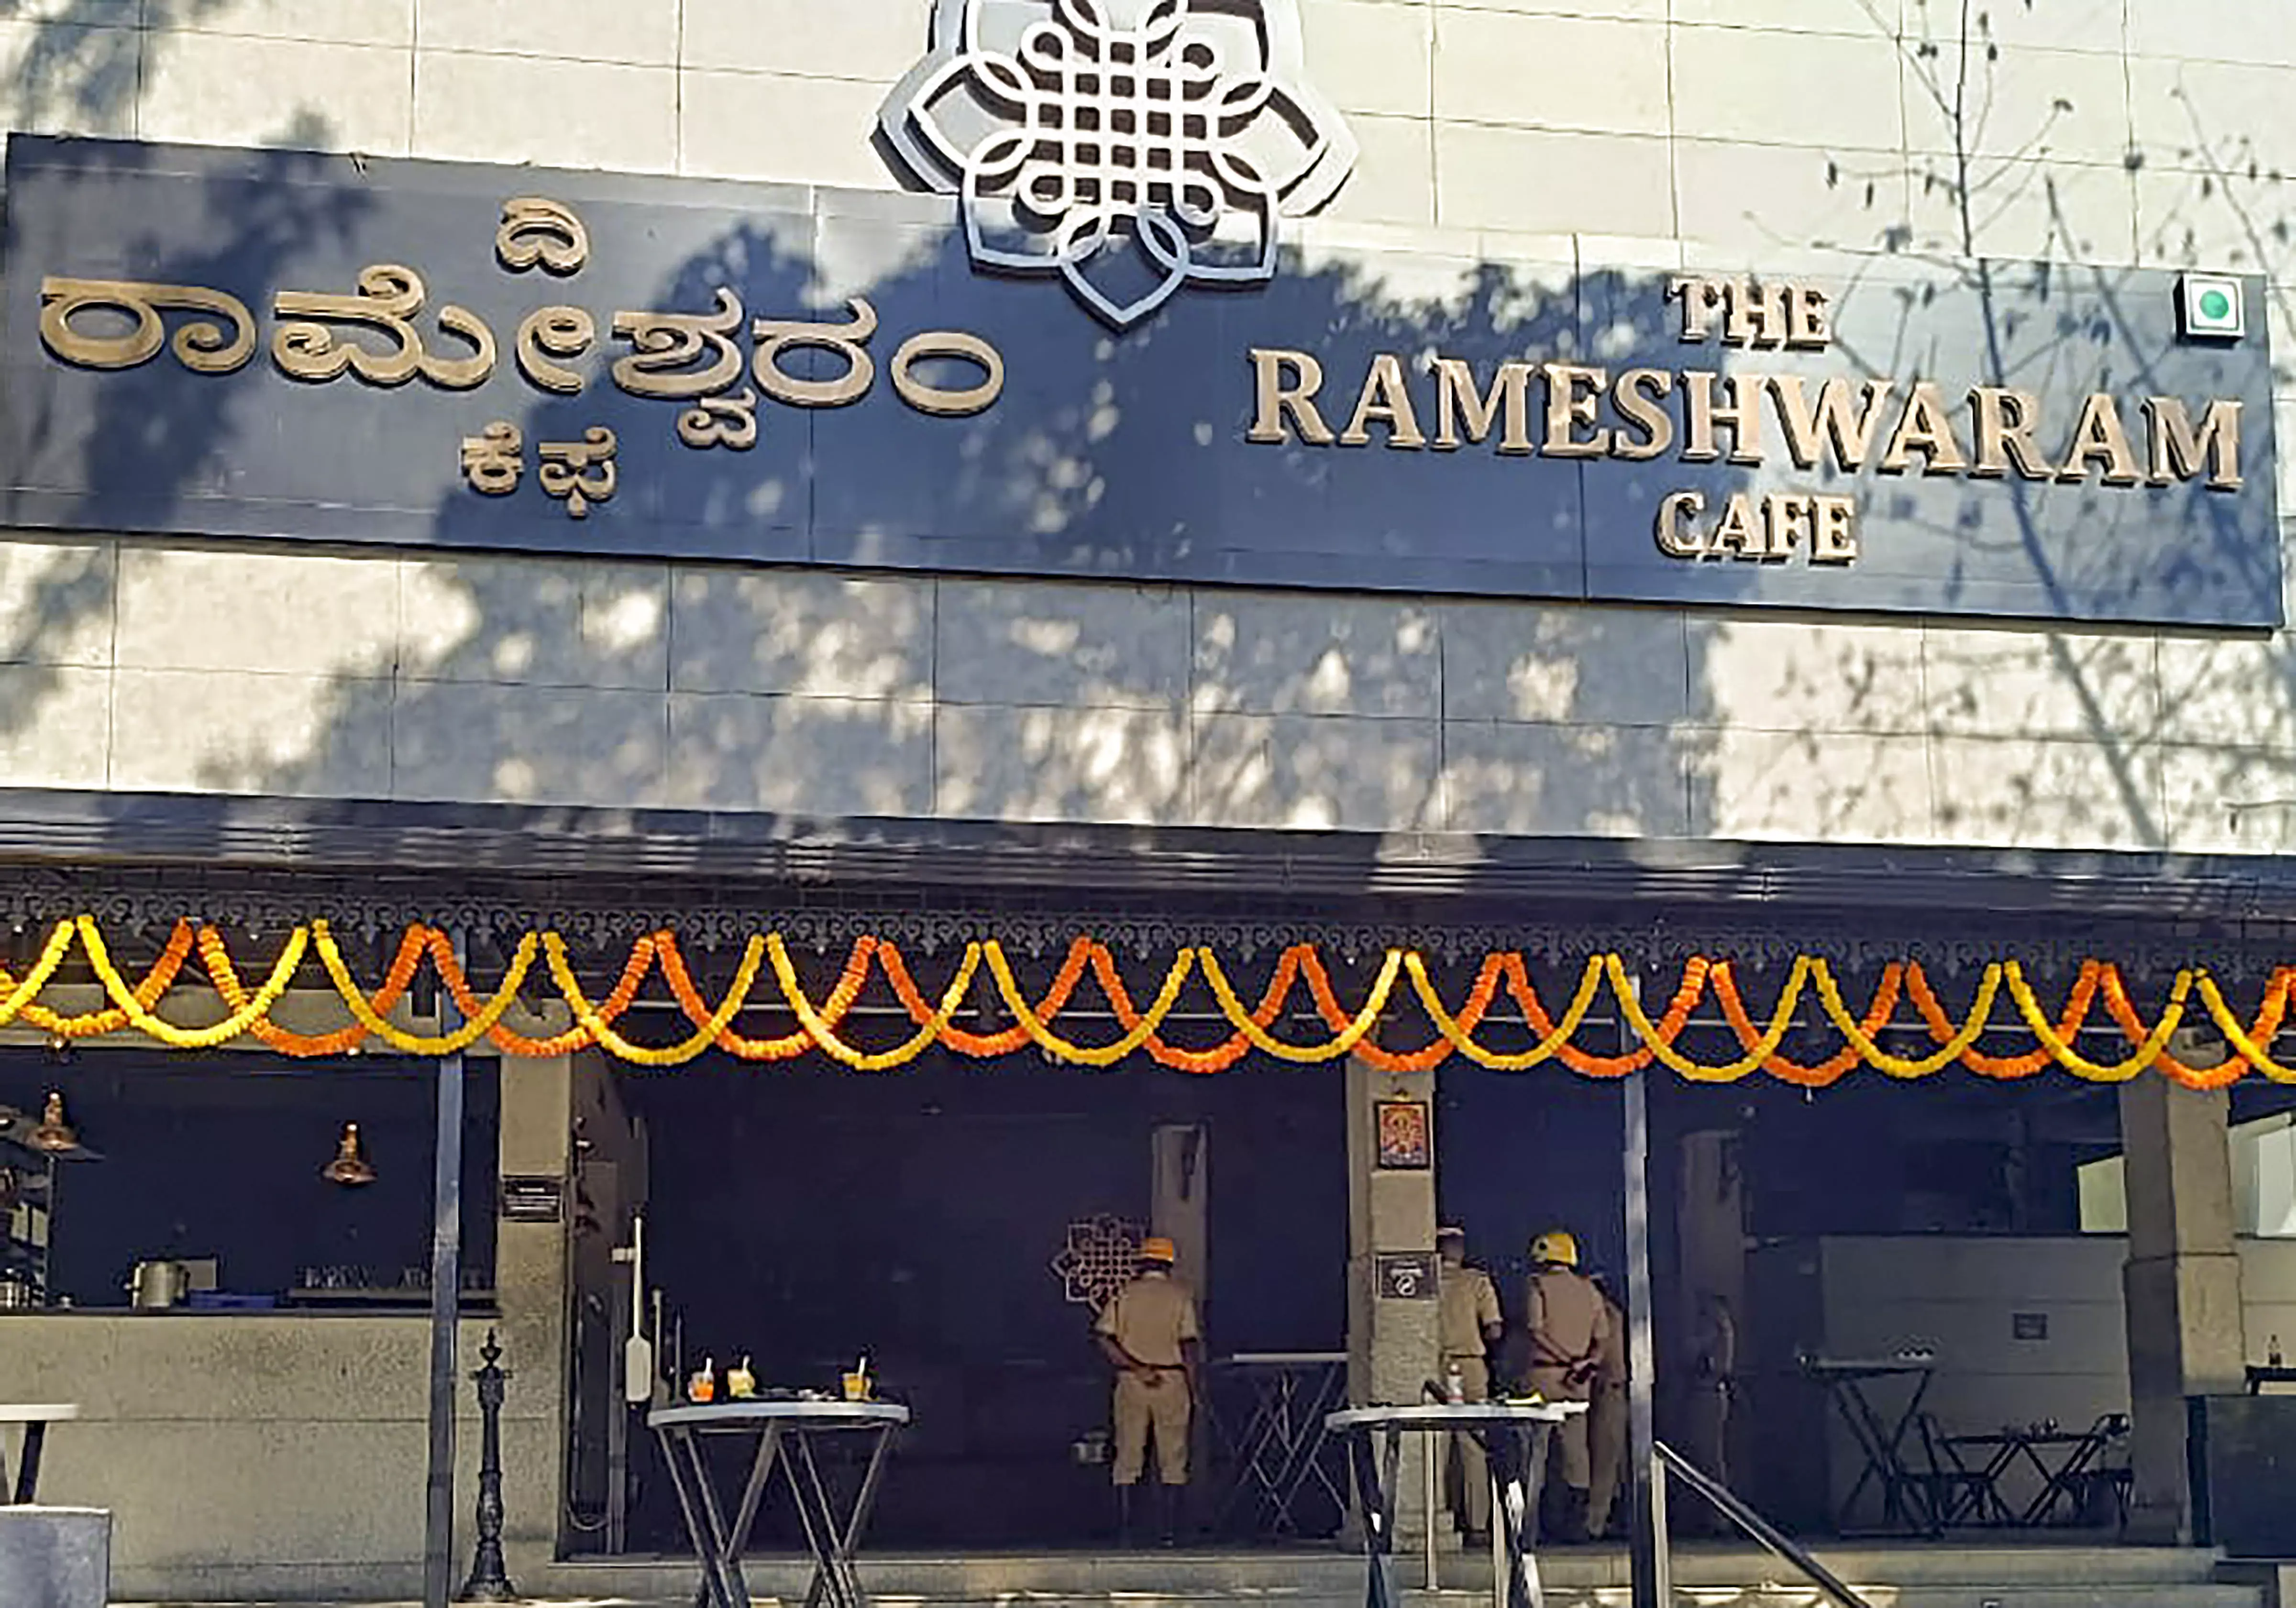 Rameshwaram Cafe blast: Suspects part of terror gang targeting South since 2010